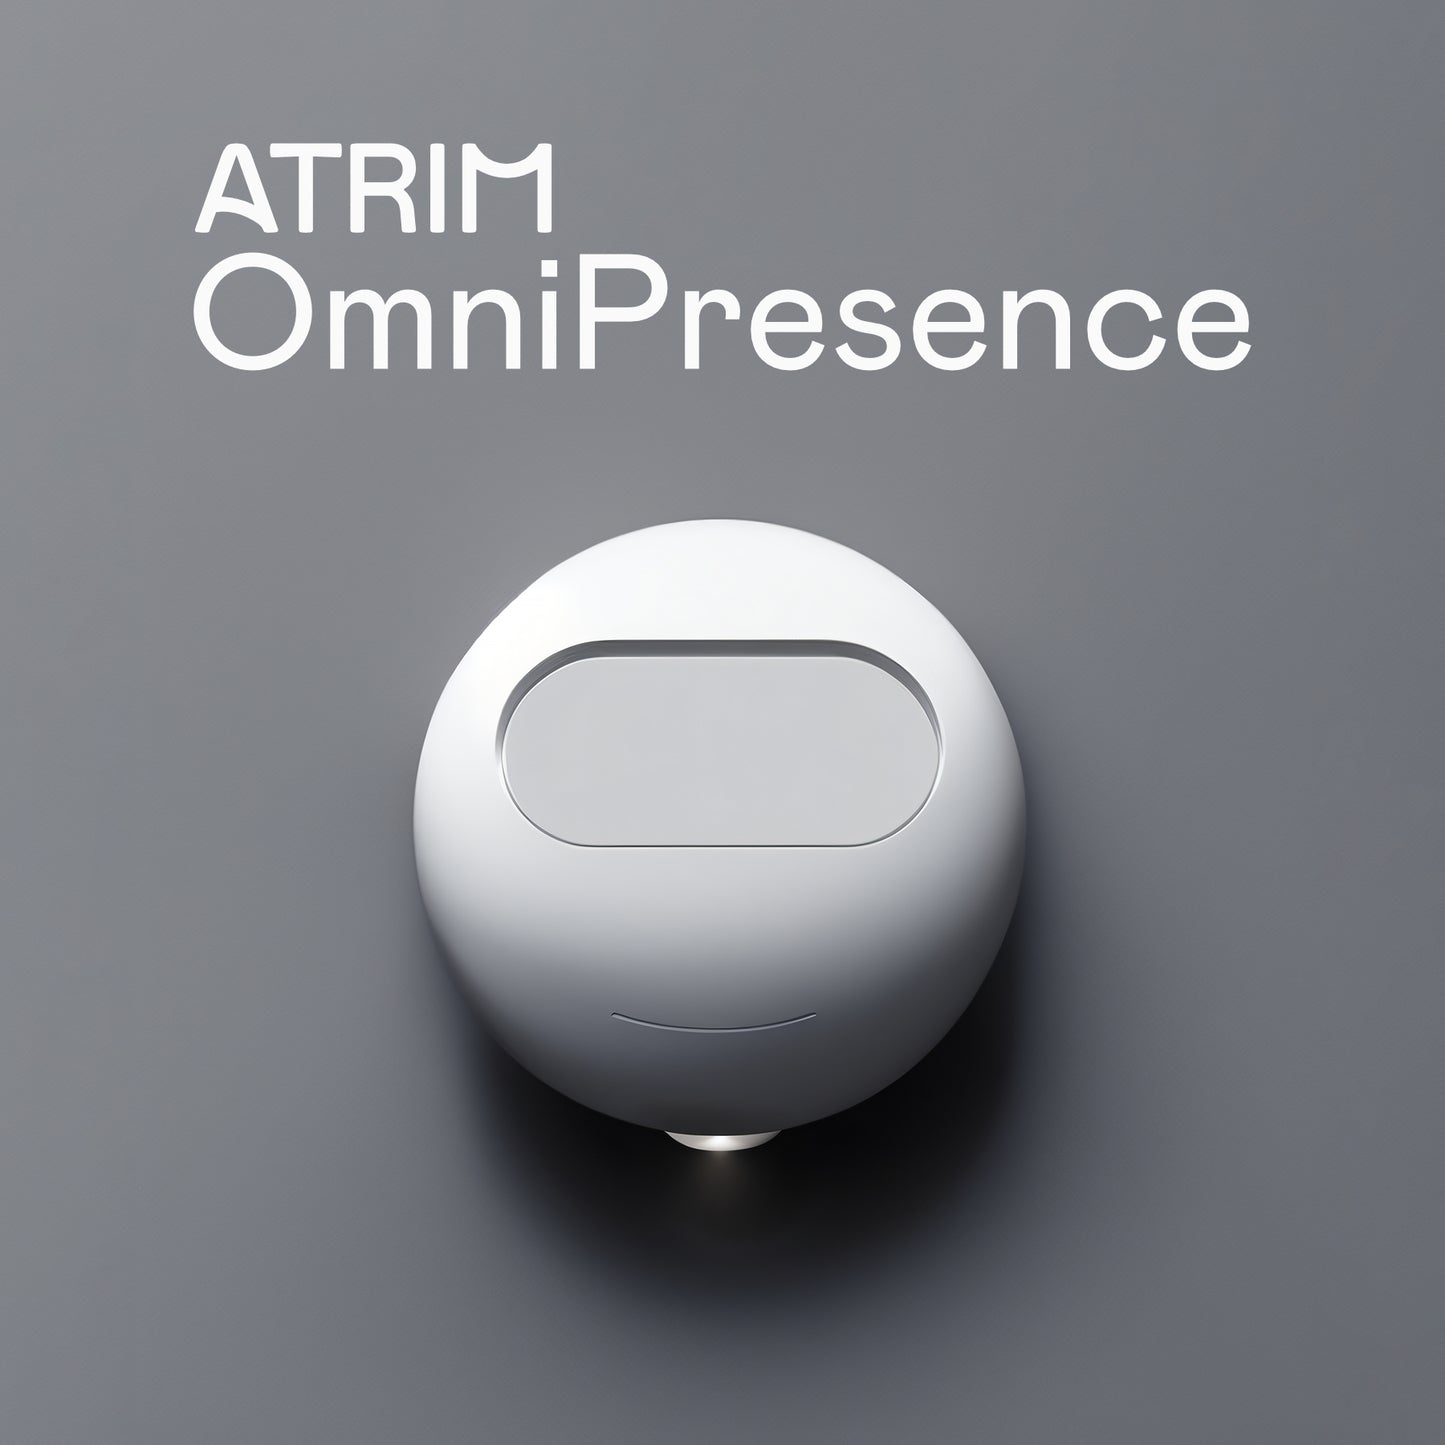 Atrim OmniPresence; Z-Wave 800, mmWave, temperature, light, humidity